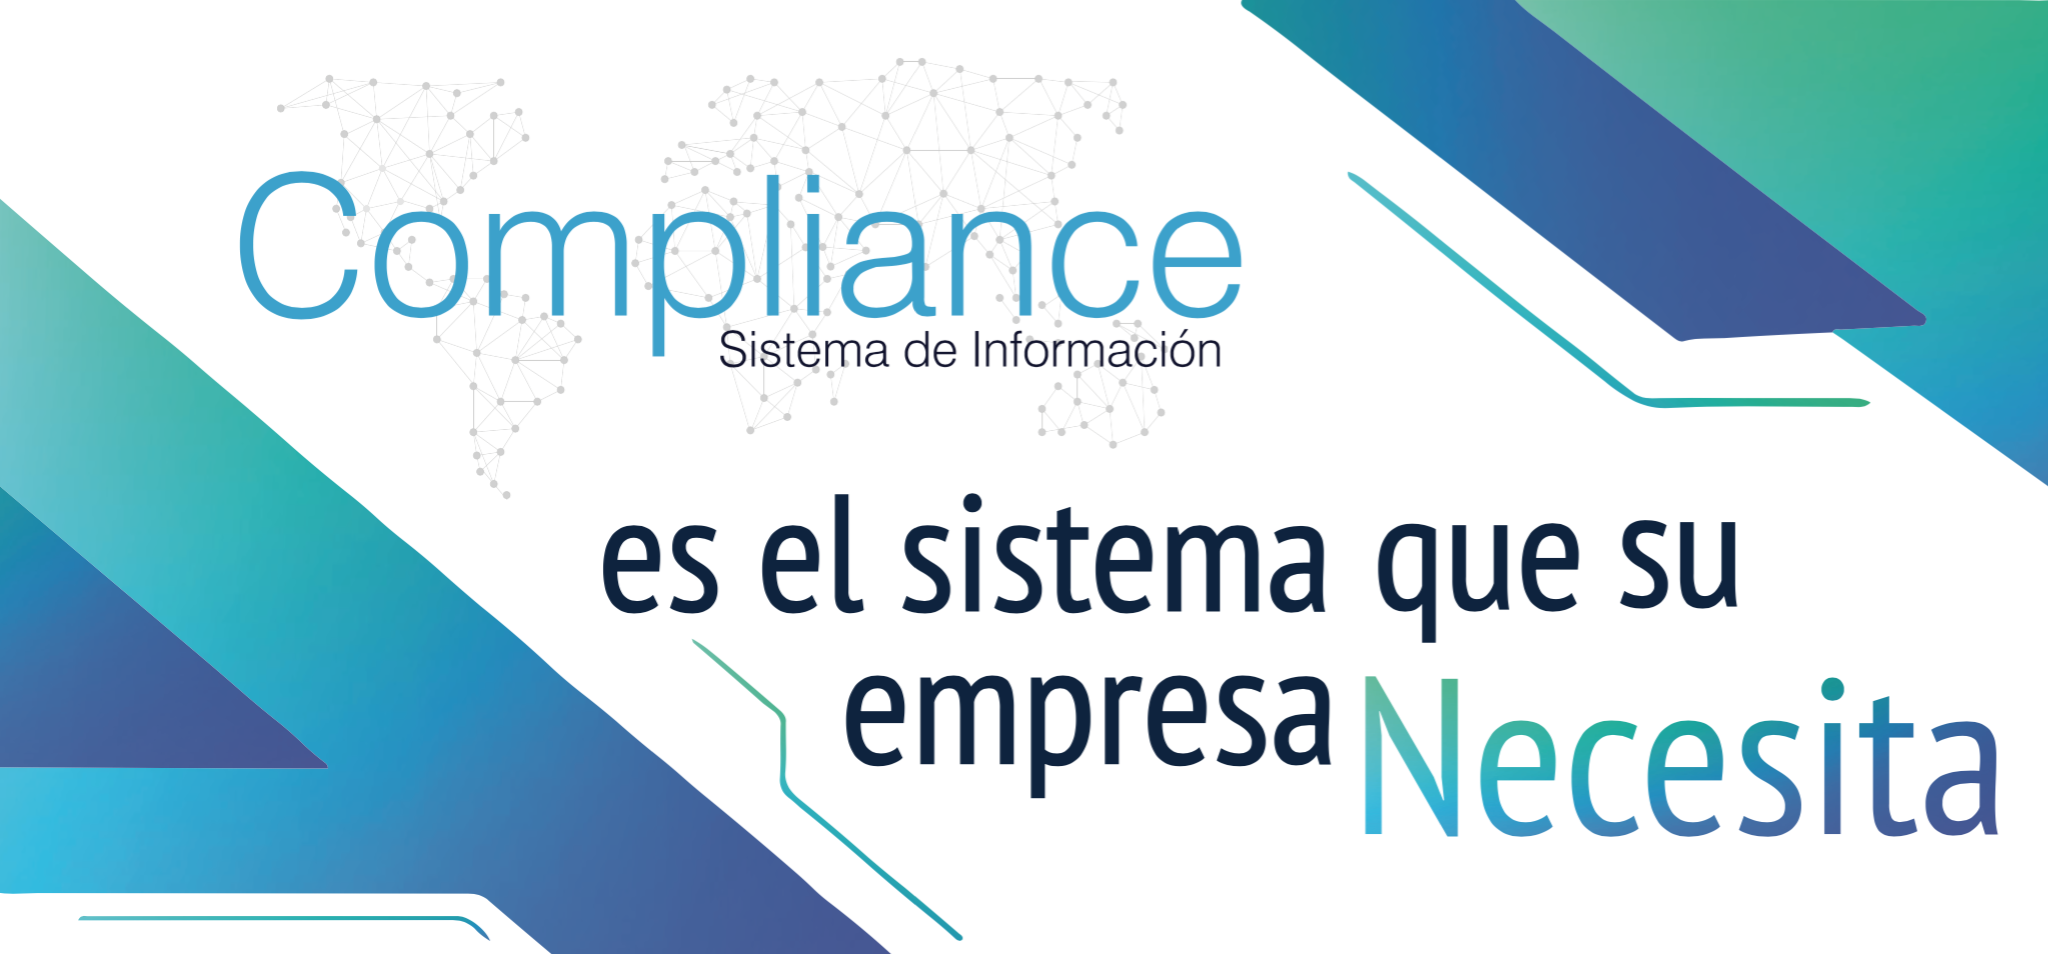 (c) Compliance.com.co